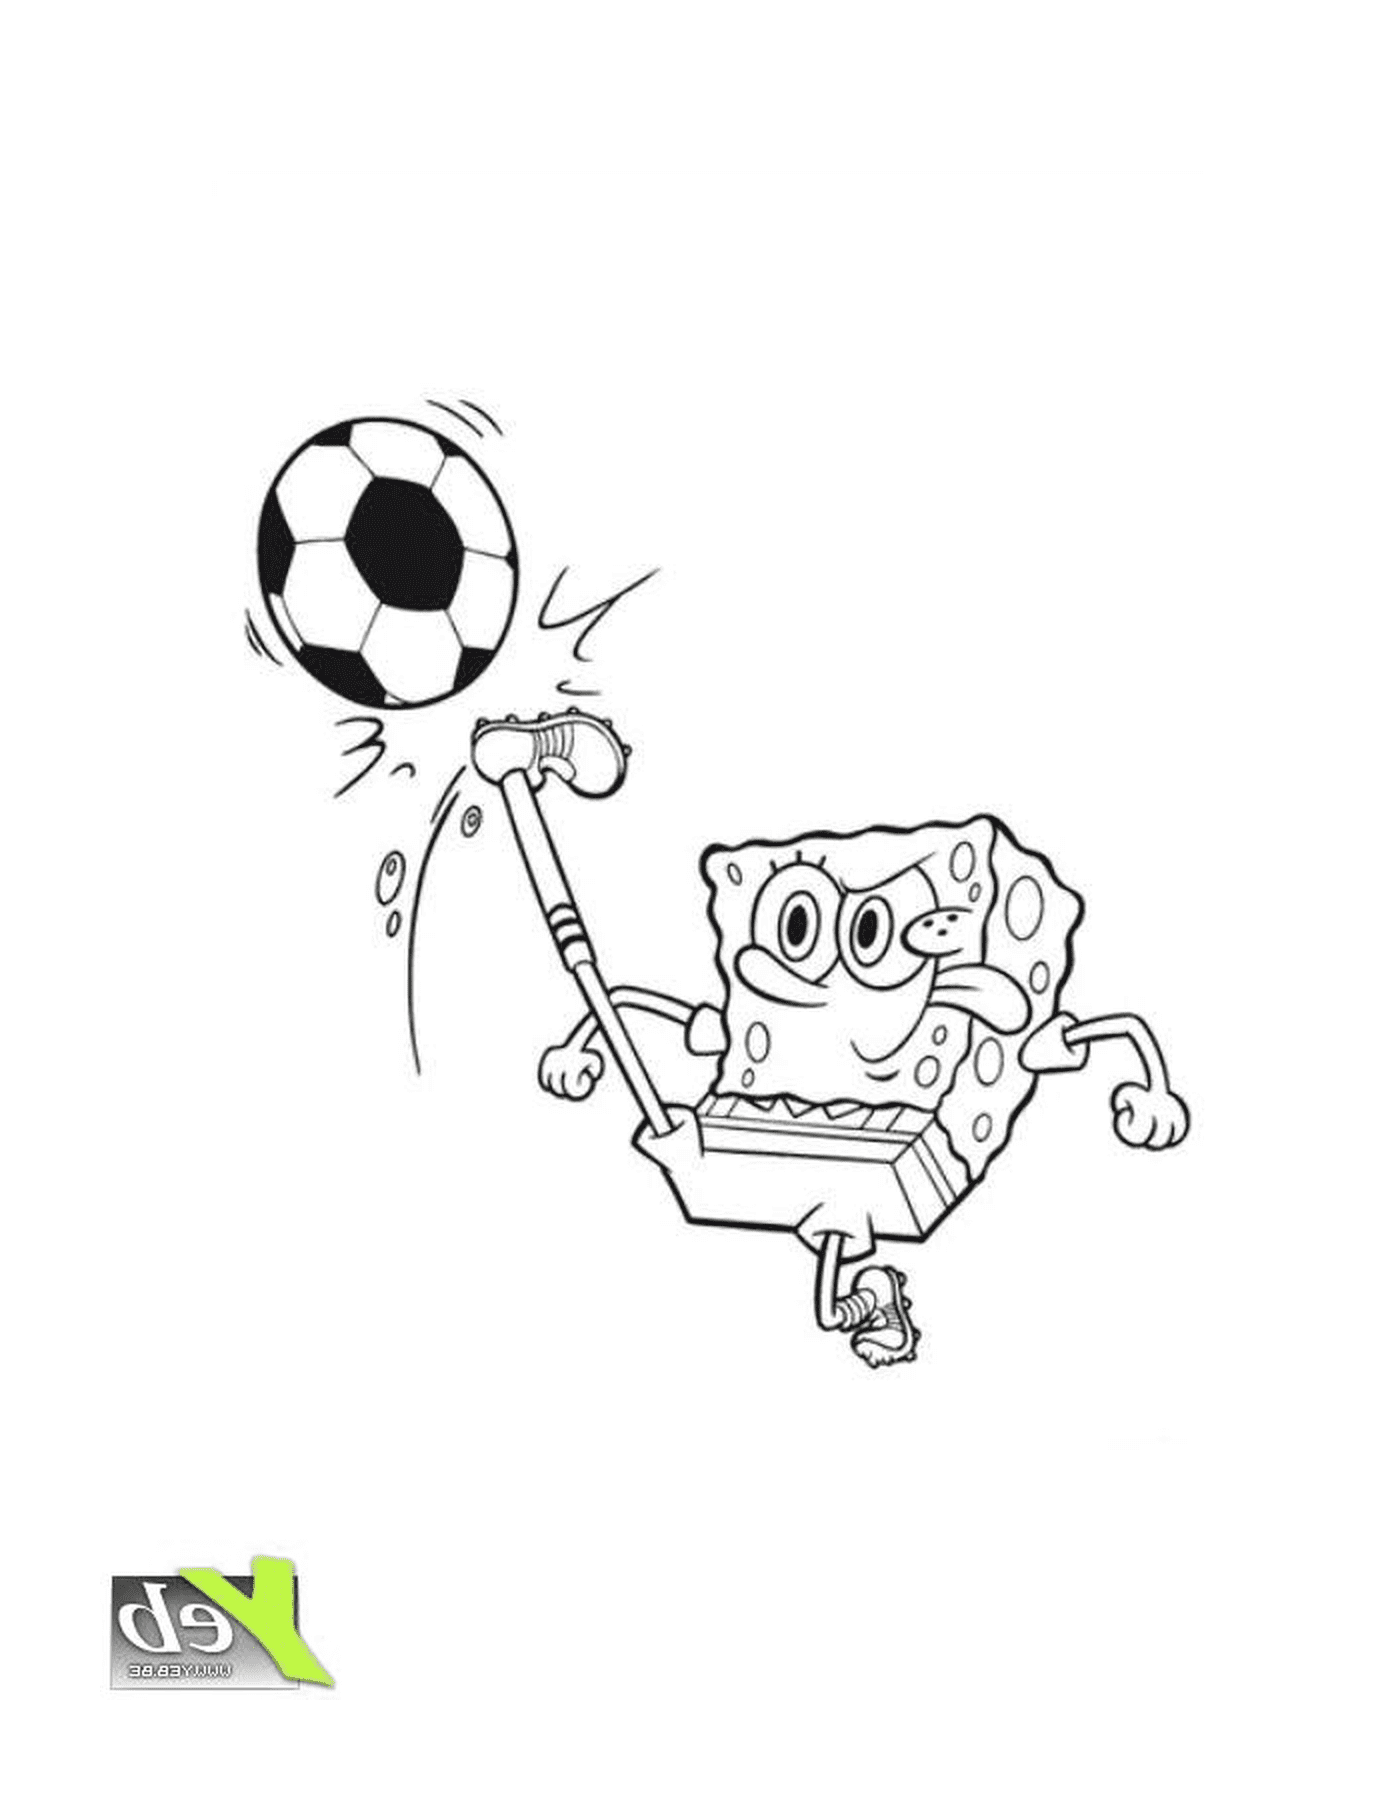  Image of a Sponge Bob playing soccer 